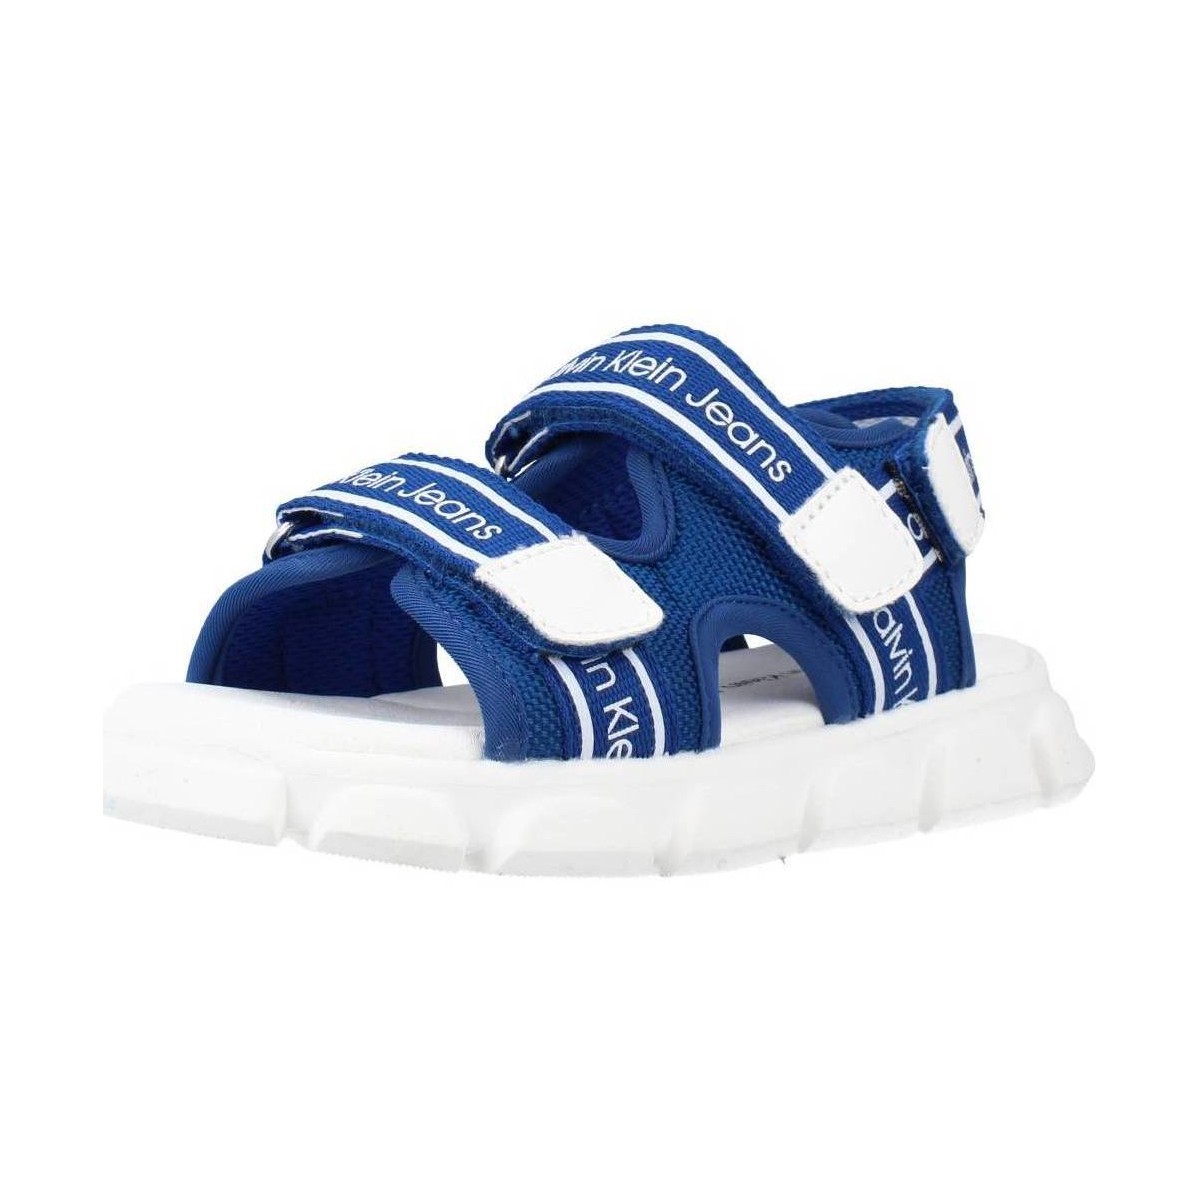 Chaussures Garçon Calvin Klein Μπουρνούζι 120184 Bleu